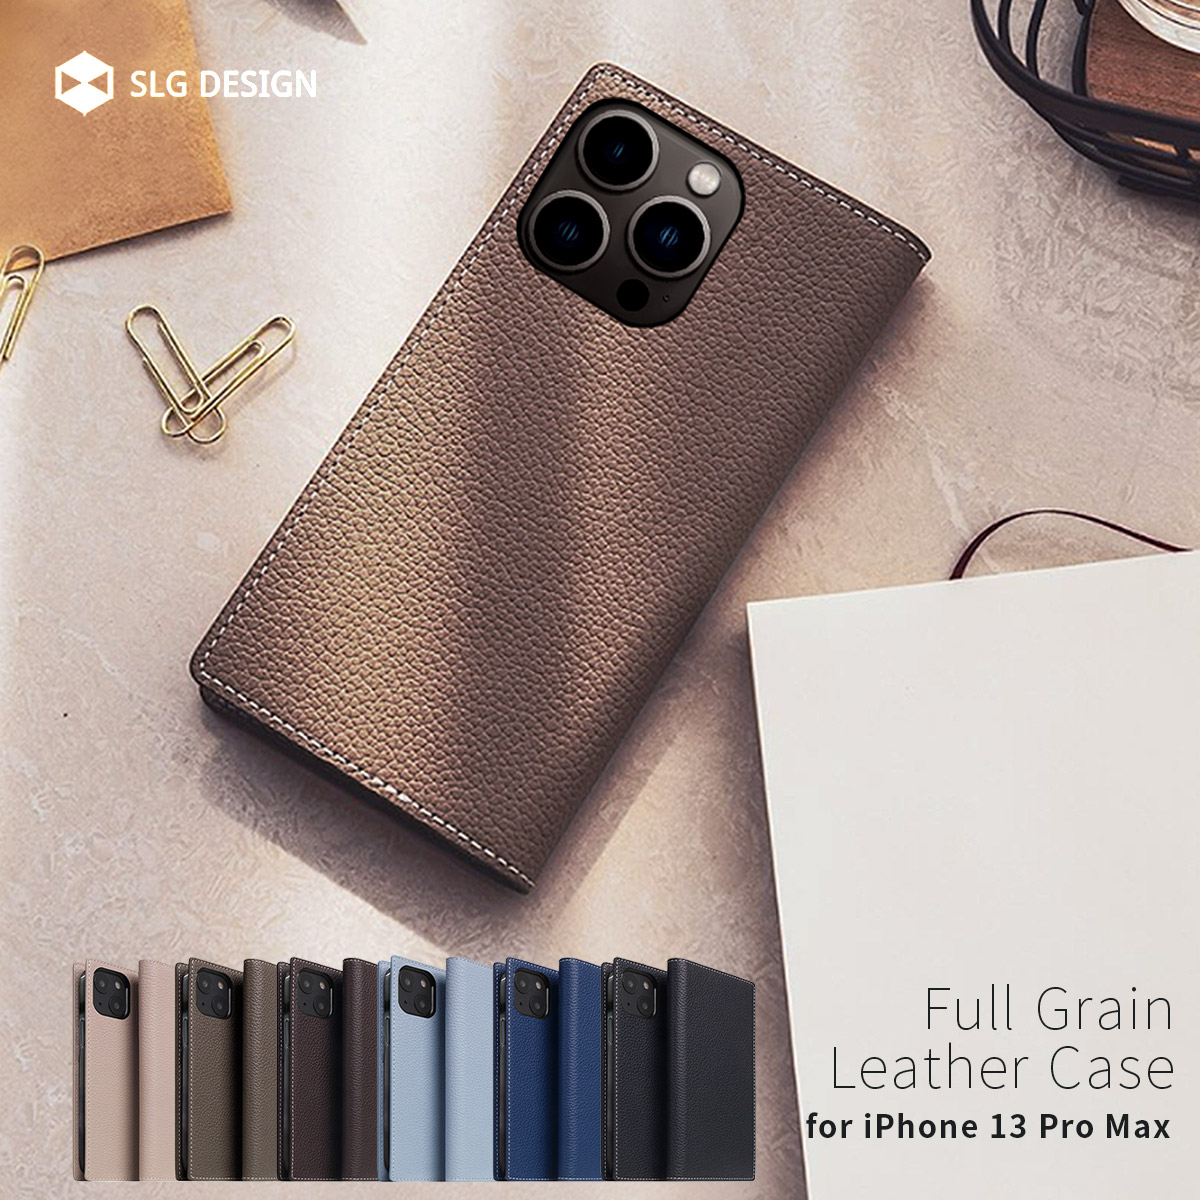 【iPhone 13 Pro Max】Full Grain Leather Case